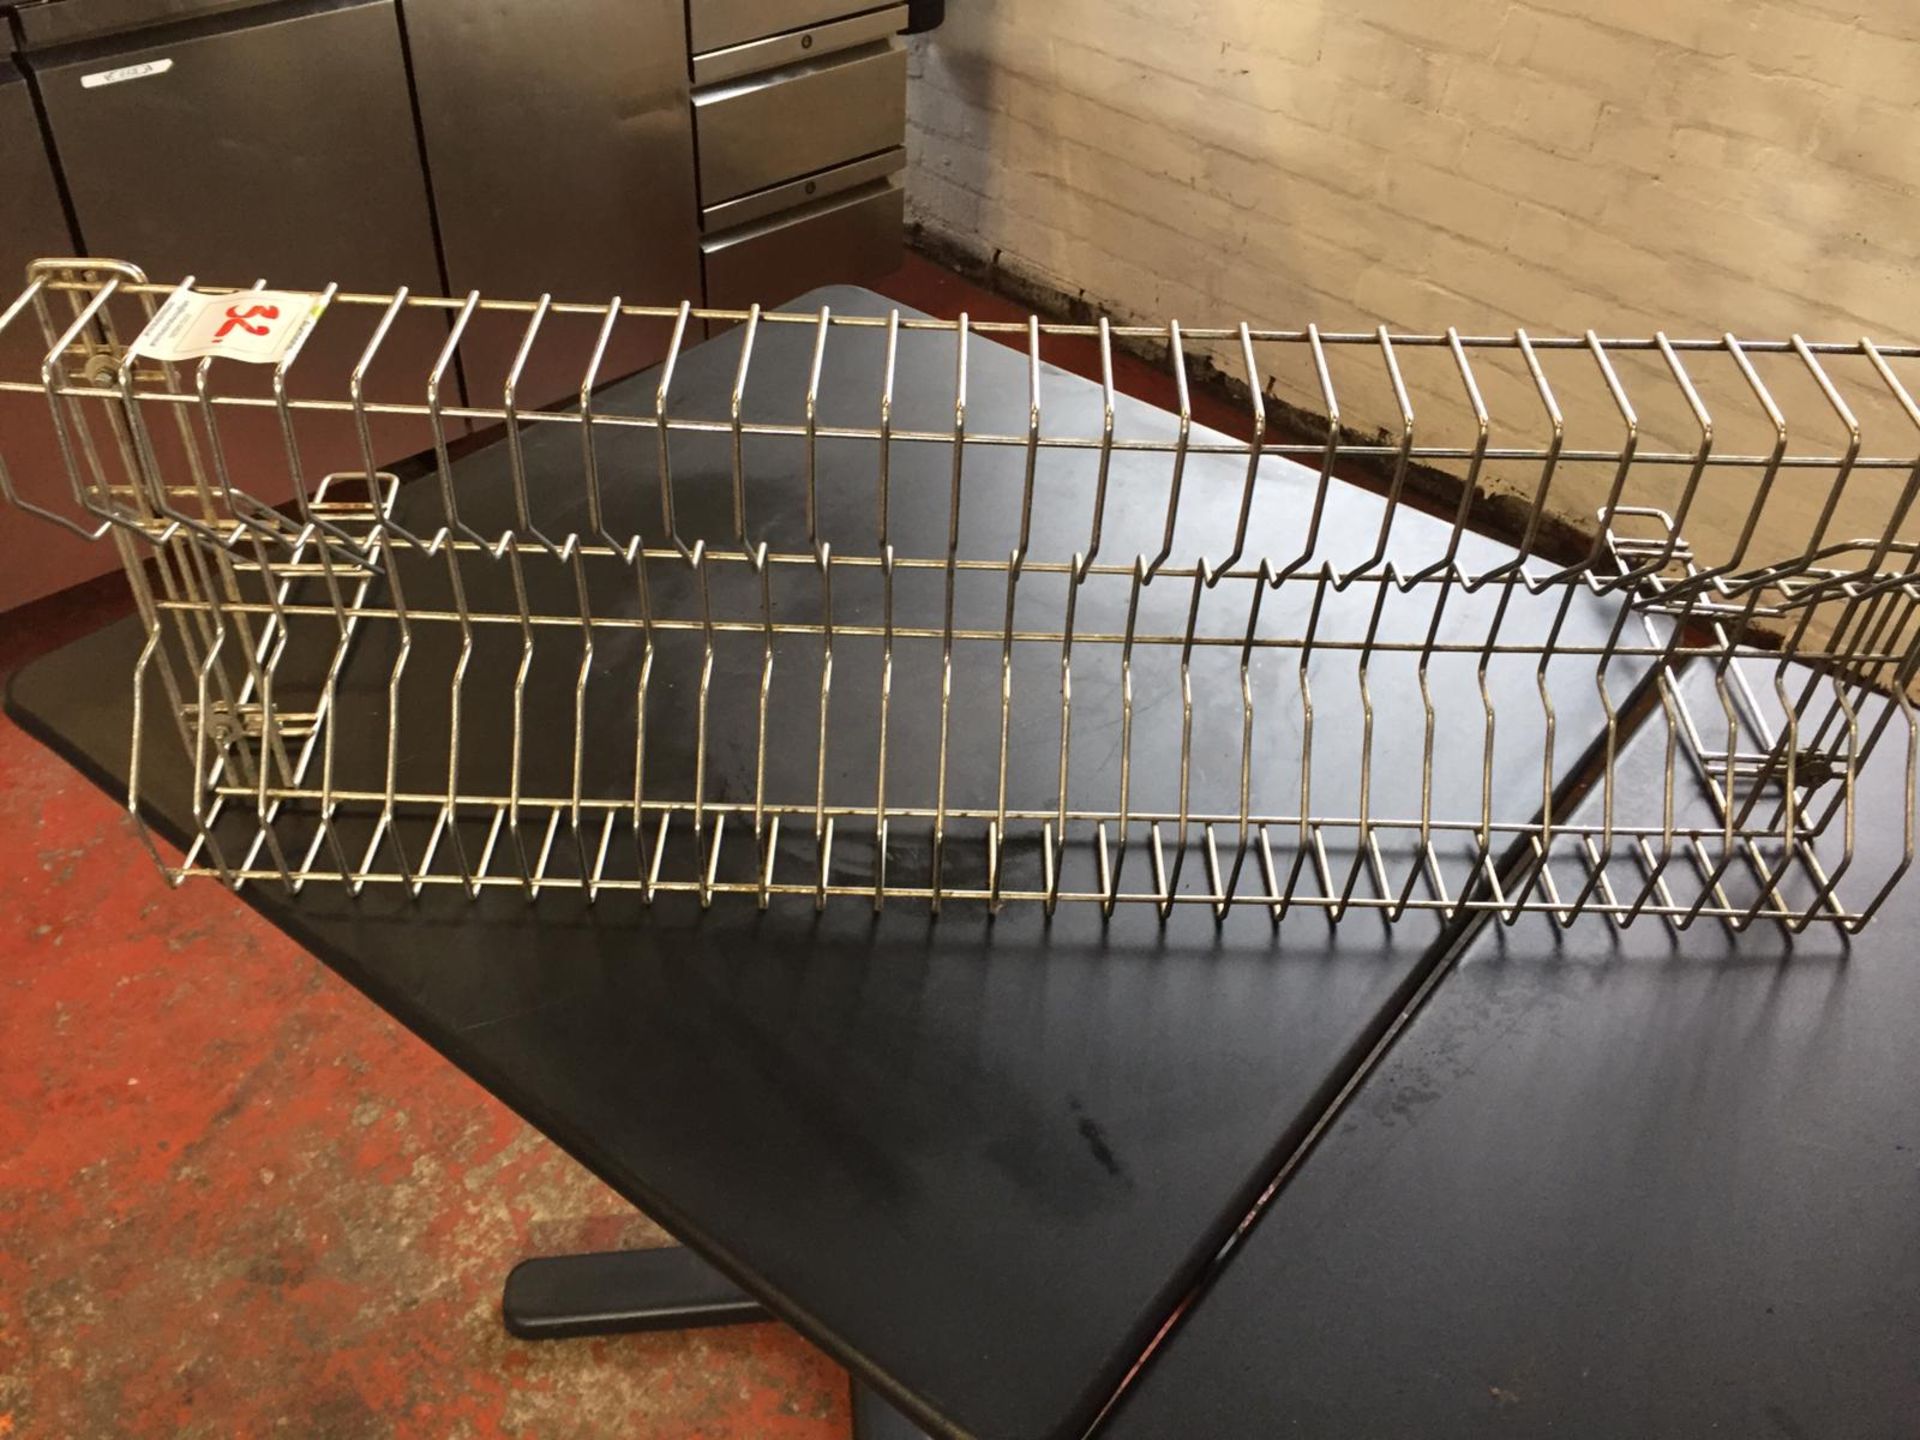 Stainless Steel Plate Racks - Image 2 of 4